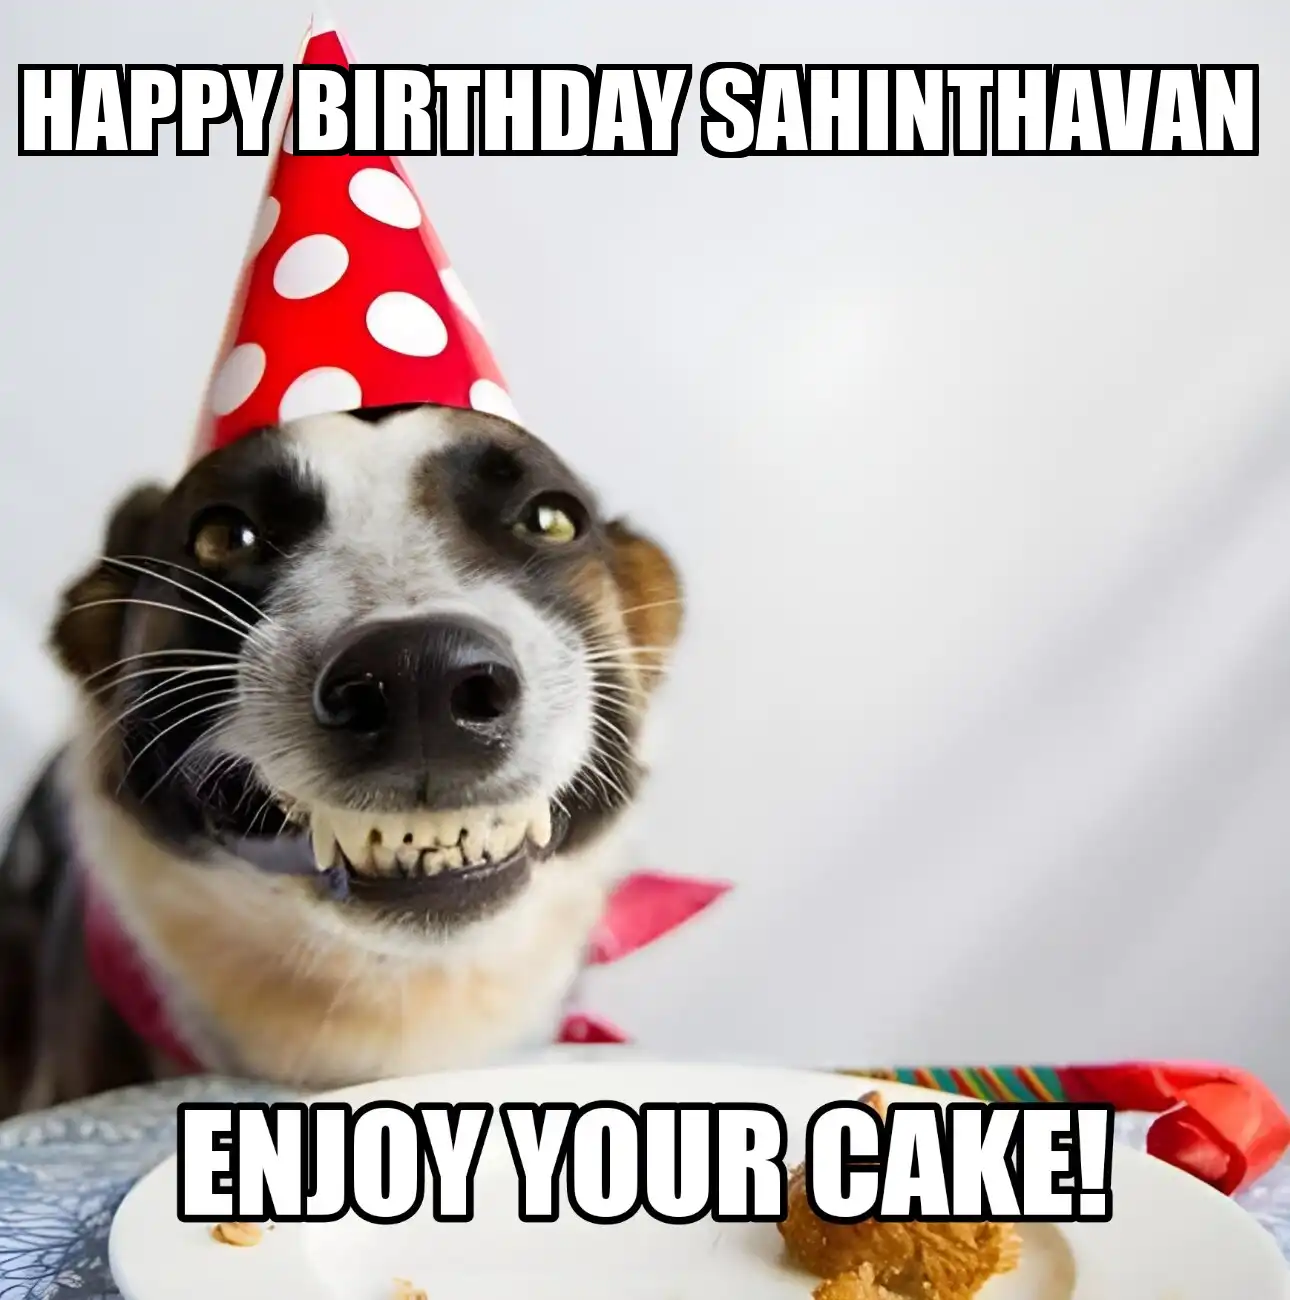 Happy Birthday Sahinthavan Enjoy Your Cake Dog Meme